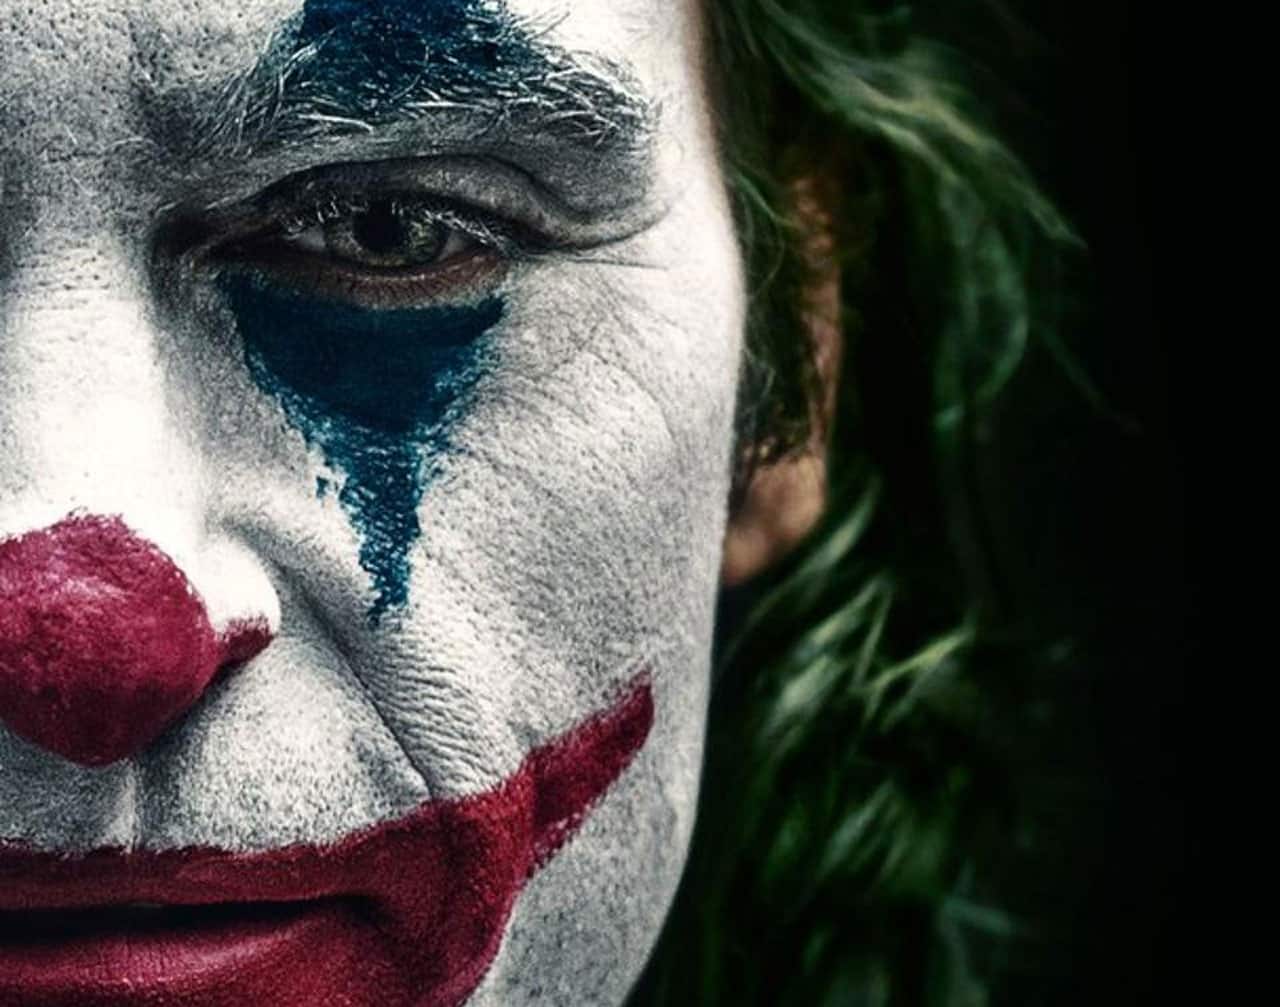 Joker Oscar Nominations 2020 Revealed - 'Joker', and 'The Irishman' Lead Nominees